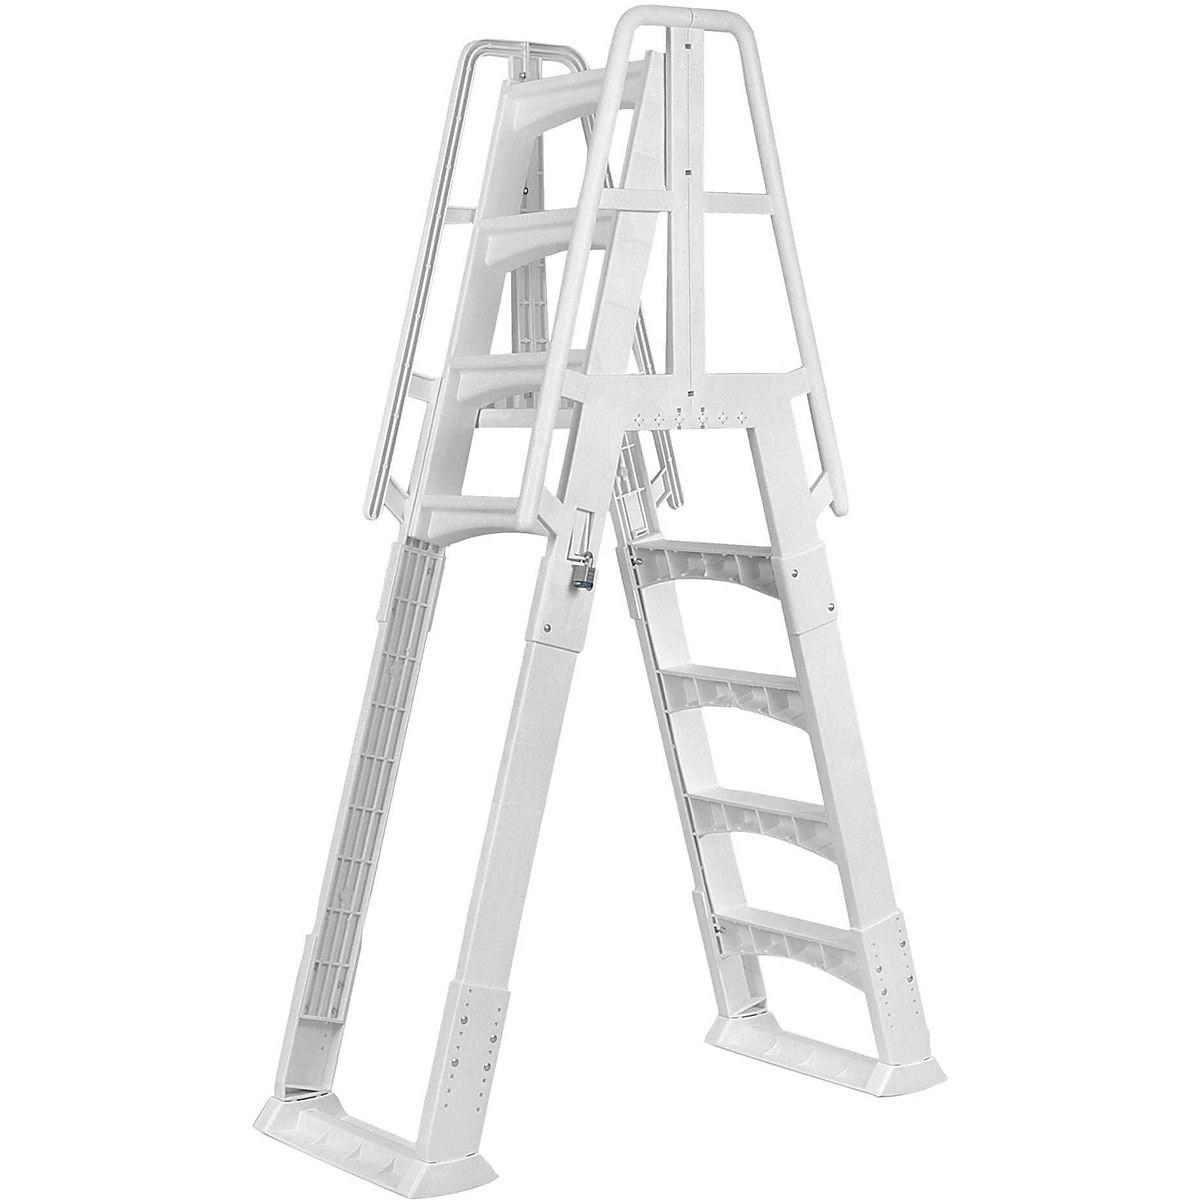 Pool Ladders for sale in Kansas City, Missouri